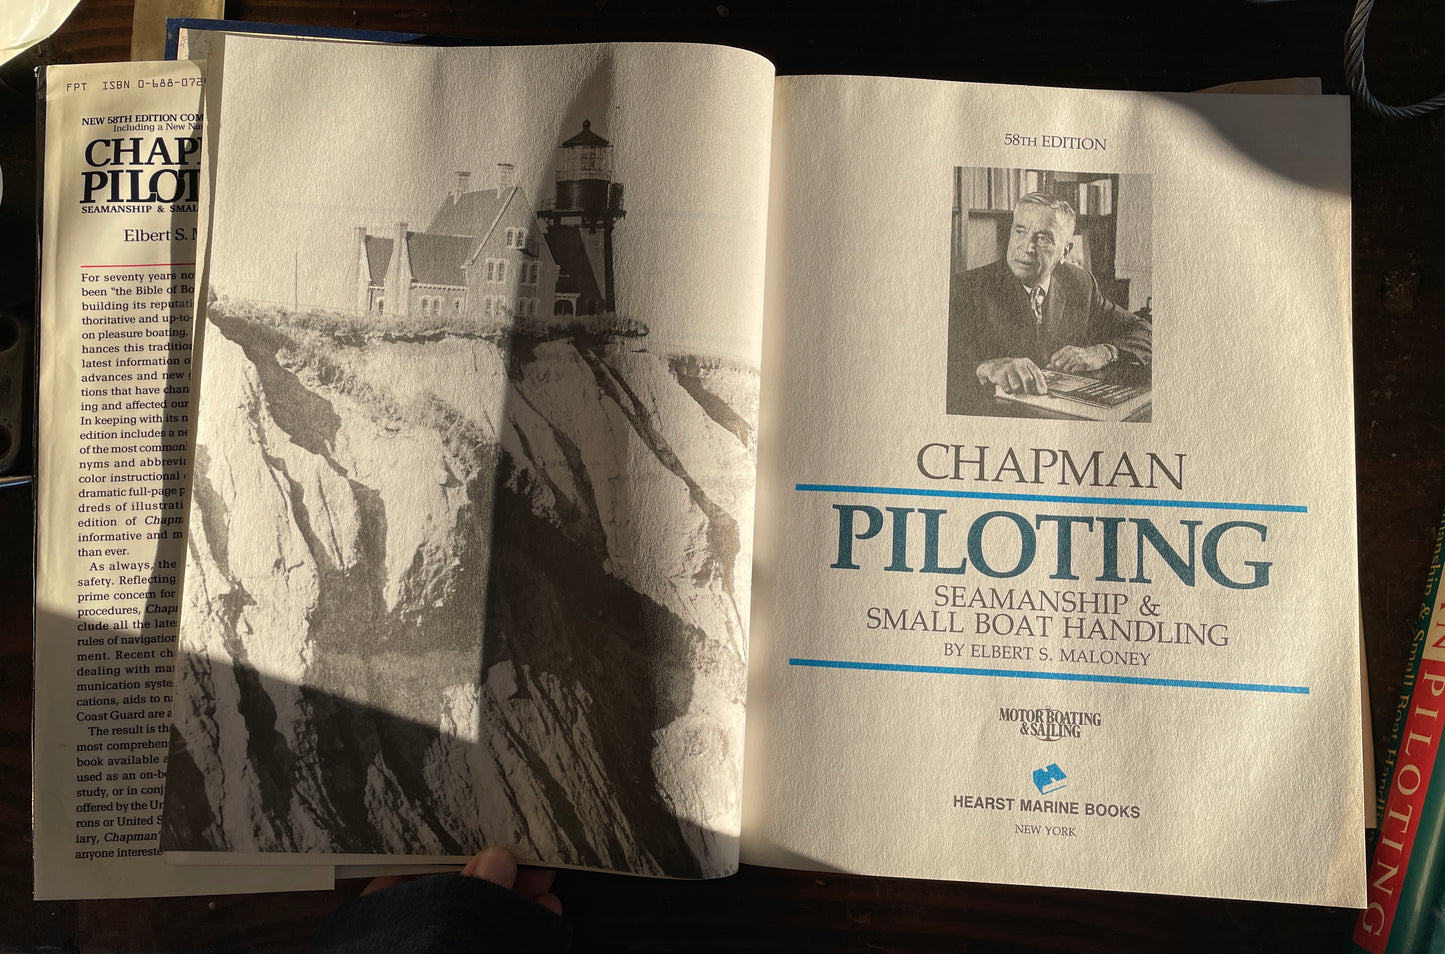 58th Edition Chapman Piloting Seaman Ship And Small Boat Handling BY Elbert S. Maloney